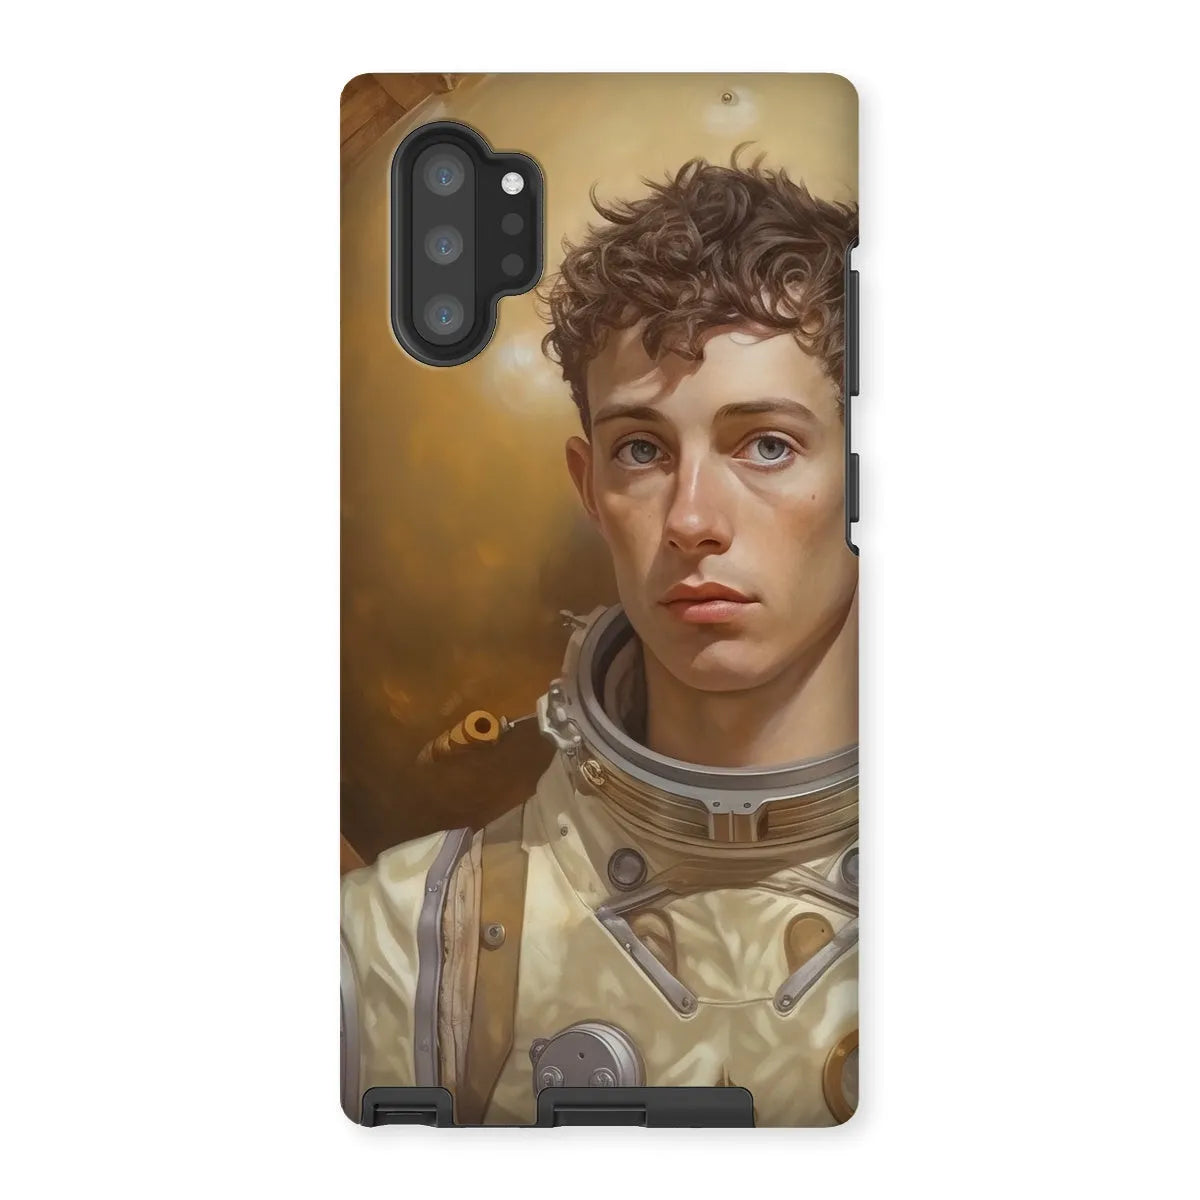 Noah The Gay Astronaut - Lgbtq Art Phone Case - Samsung Galaxy Note 10p / Matte - Mobile Phone Cases - Aesthetic Art